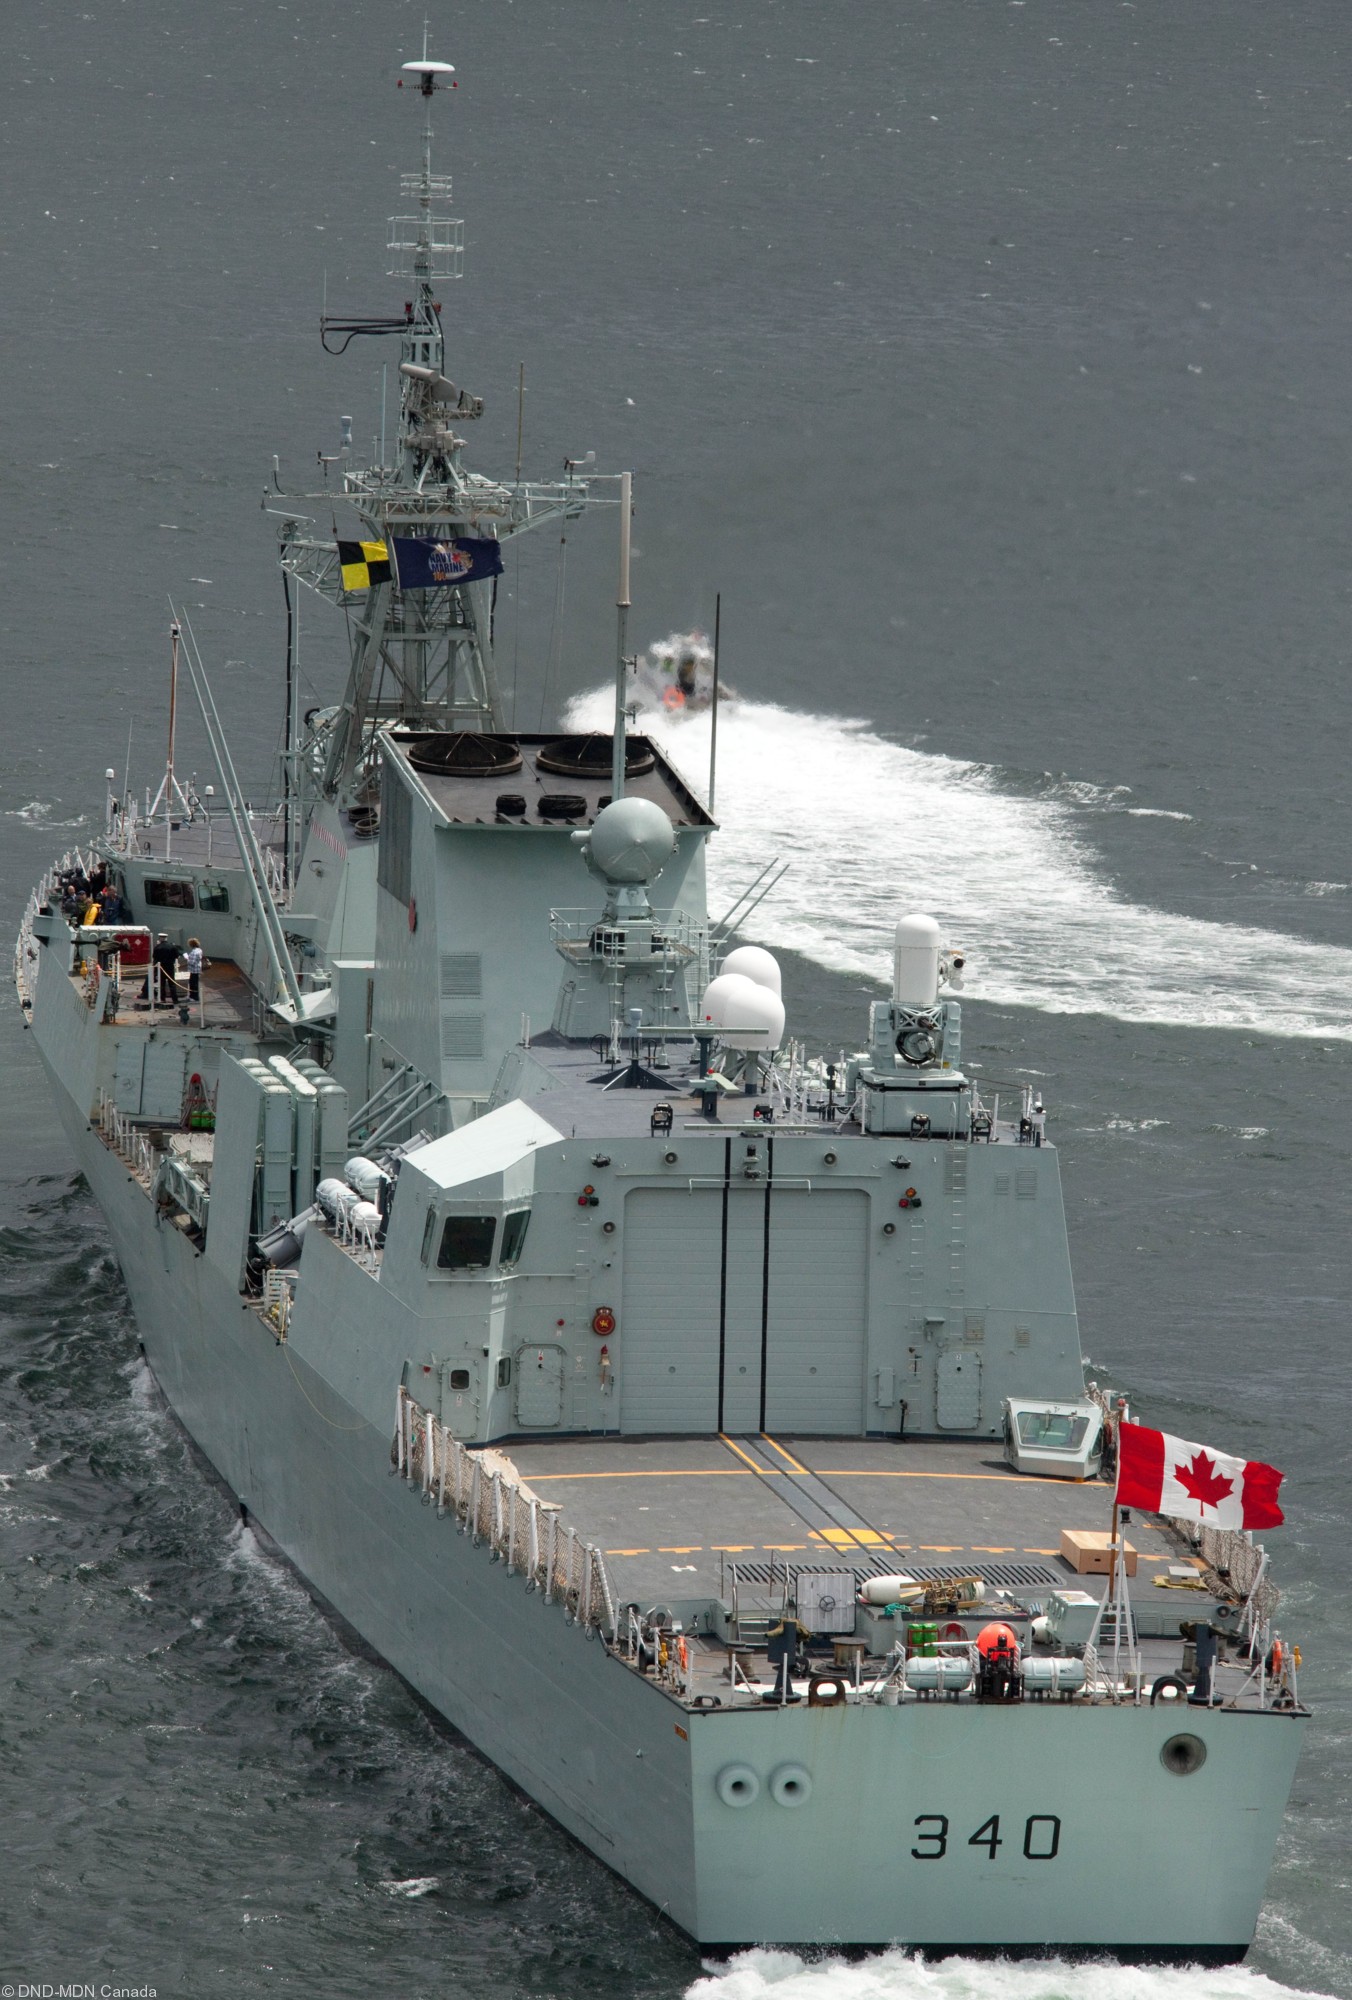 ffh-340 hmcs st. john's halifax class helicopter patrol frigate ncsm royal canadian navy 32